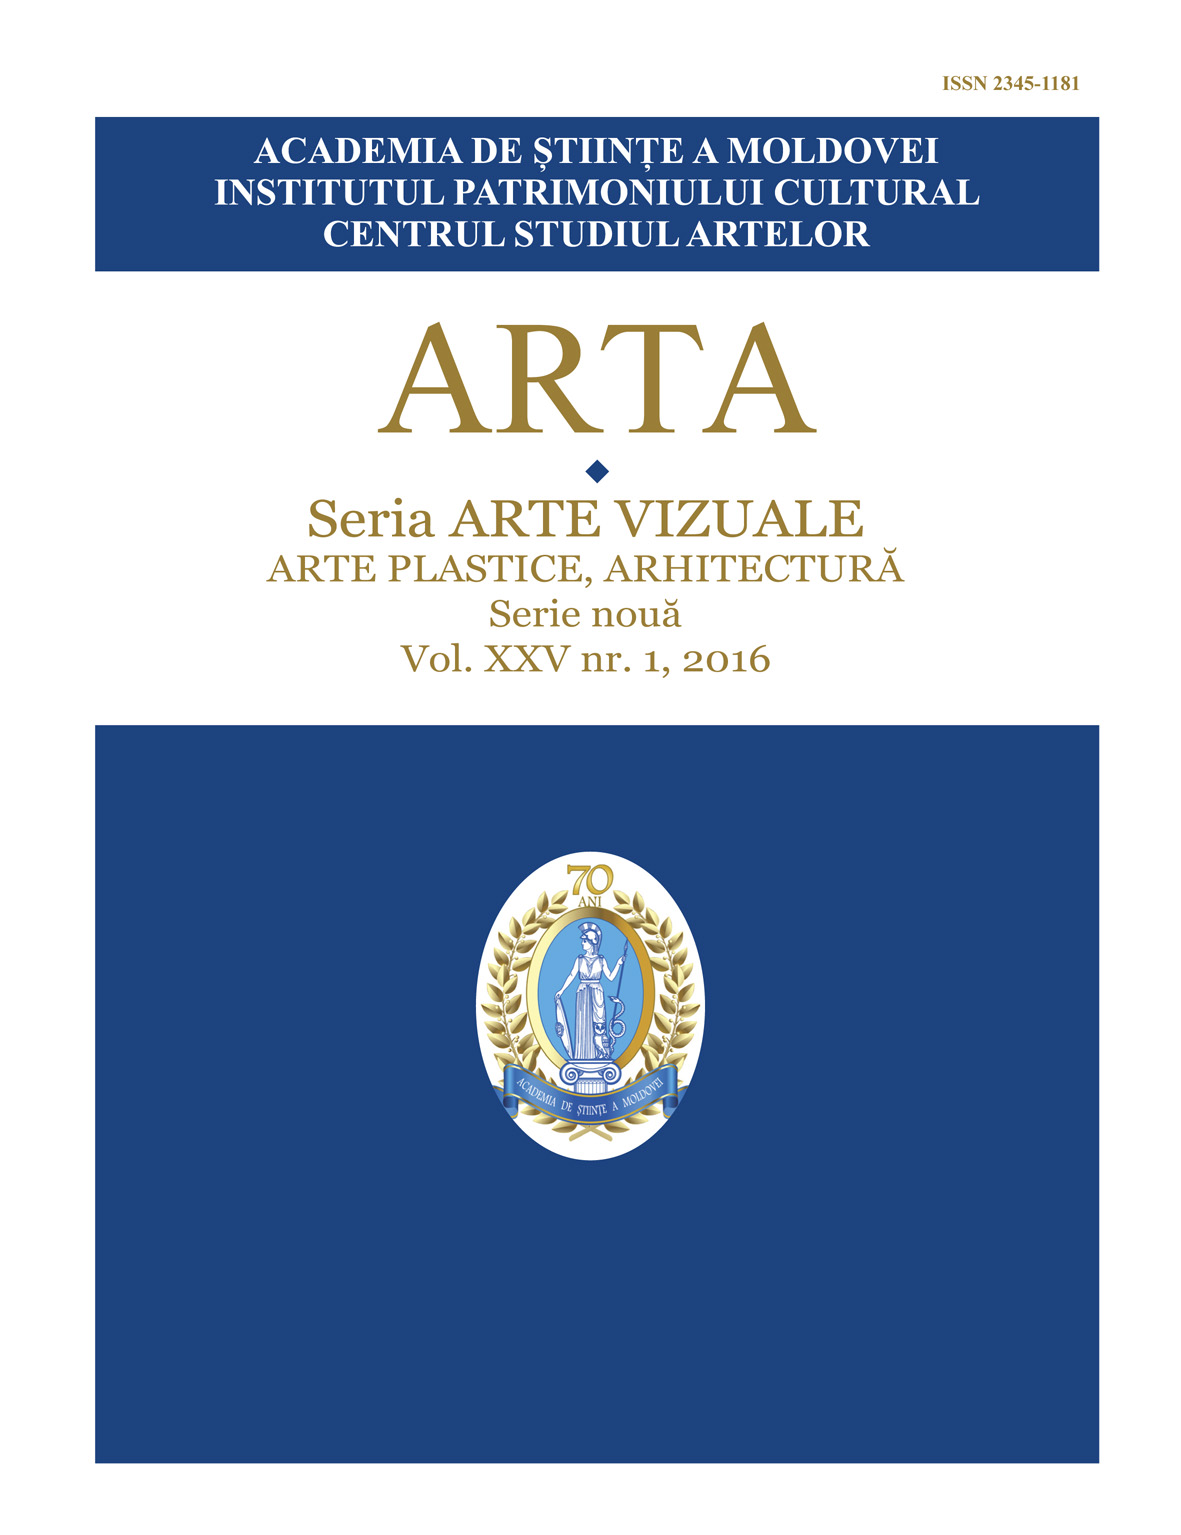 Scientific Magazine ARTA Cover Image